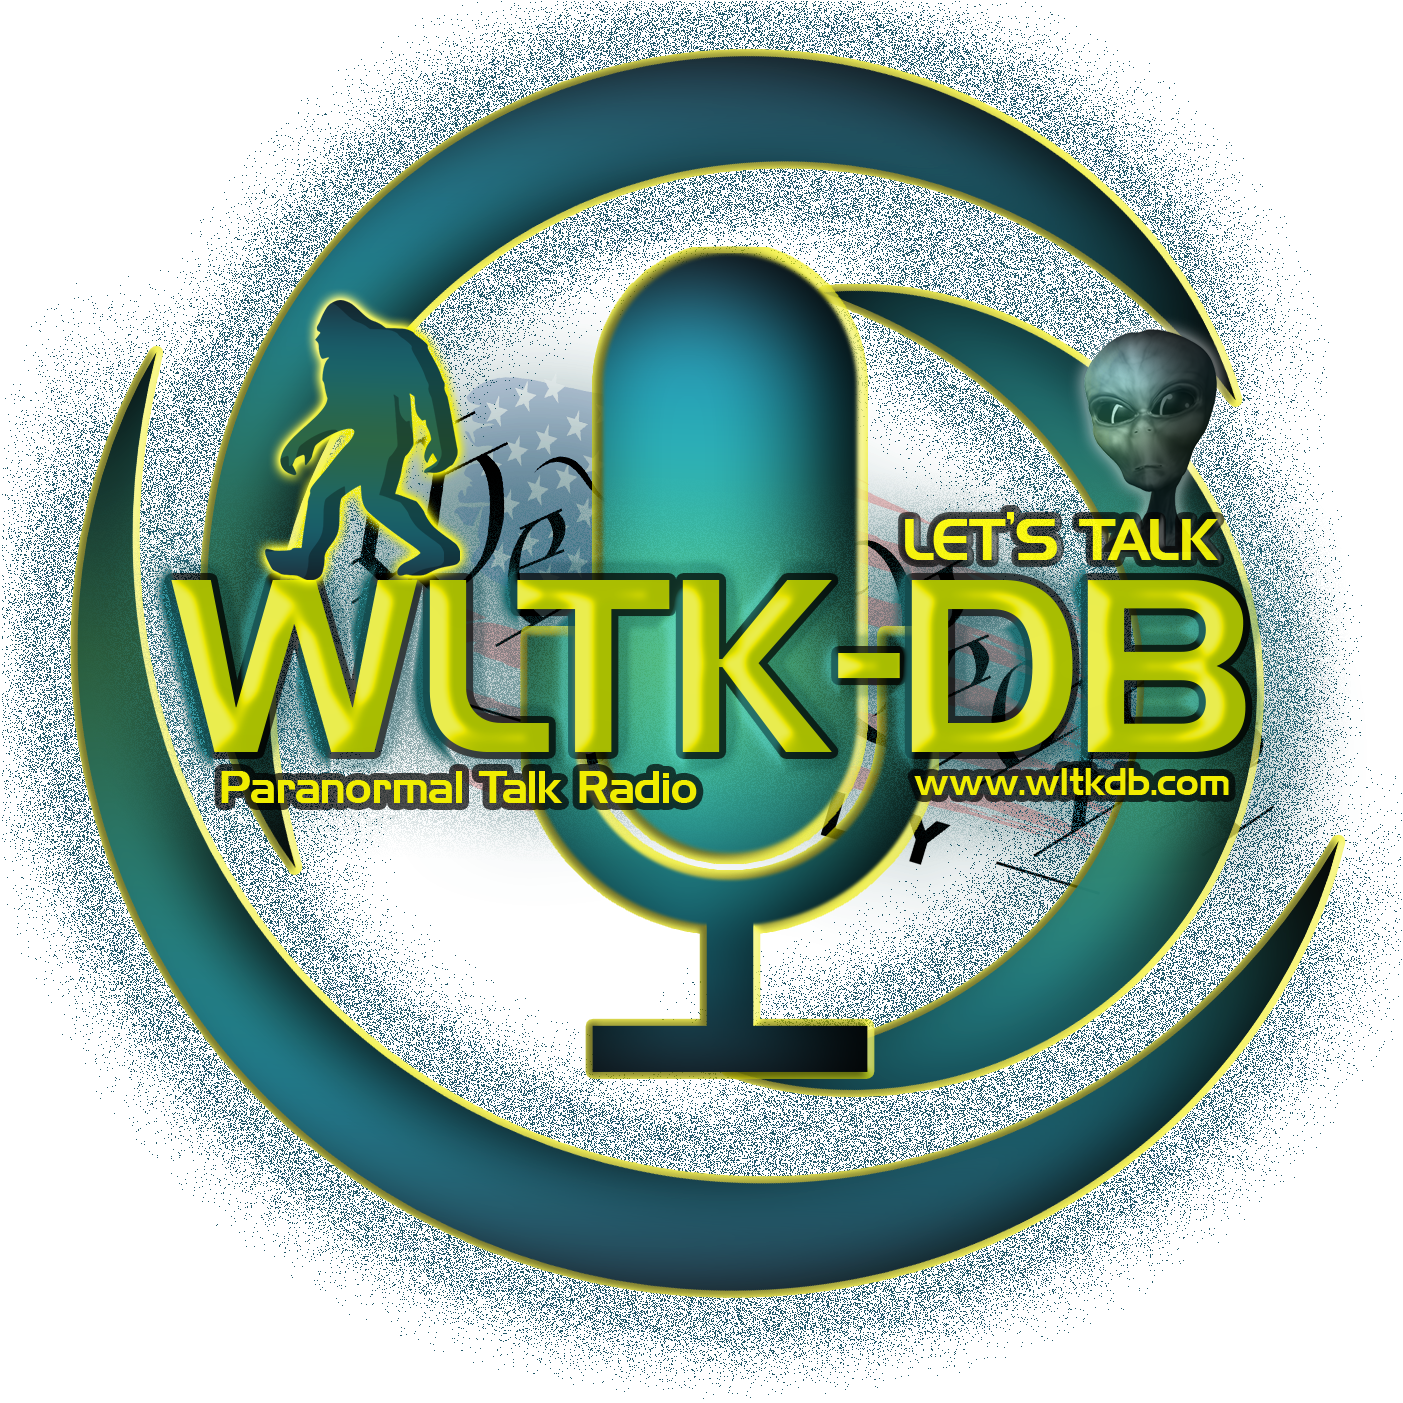 WLTK-DB Paranormal Talk Radio